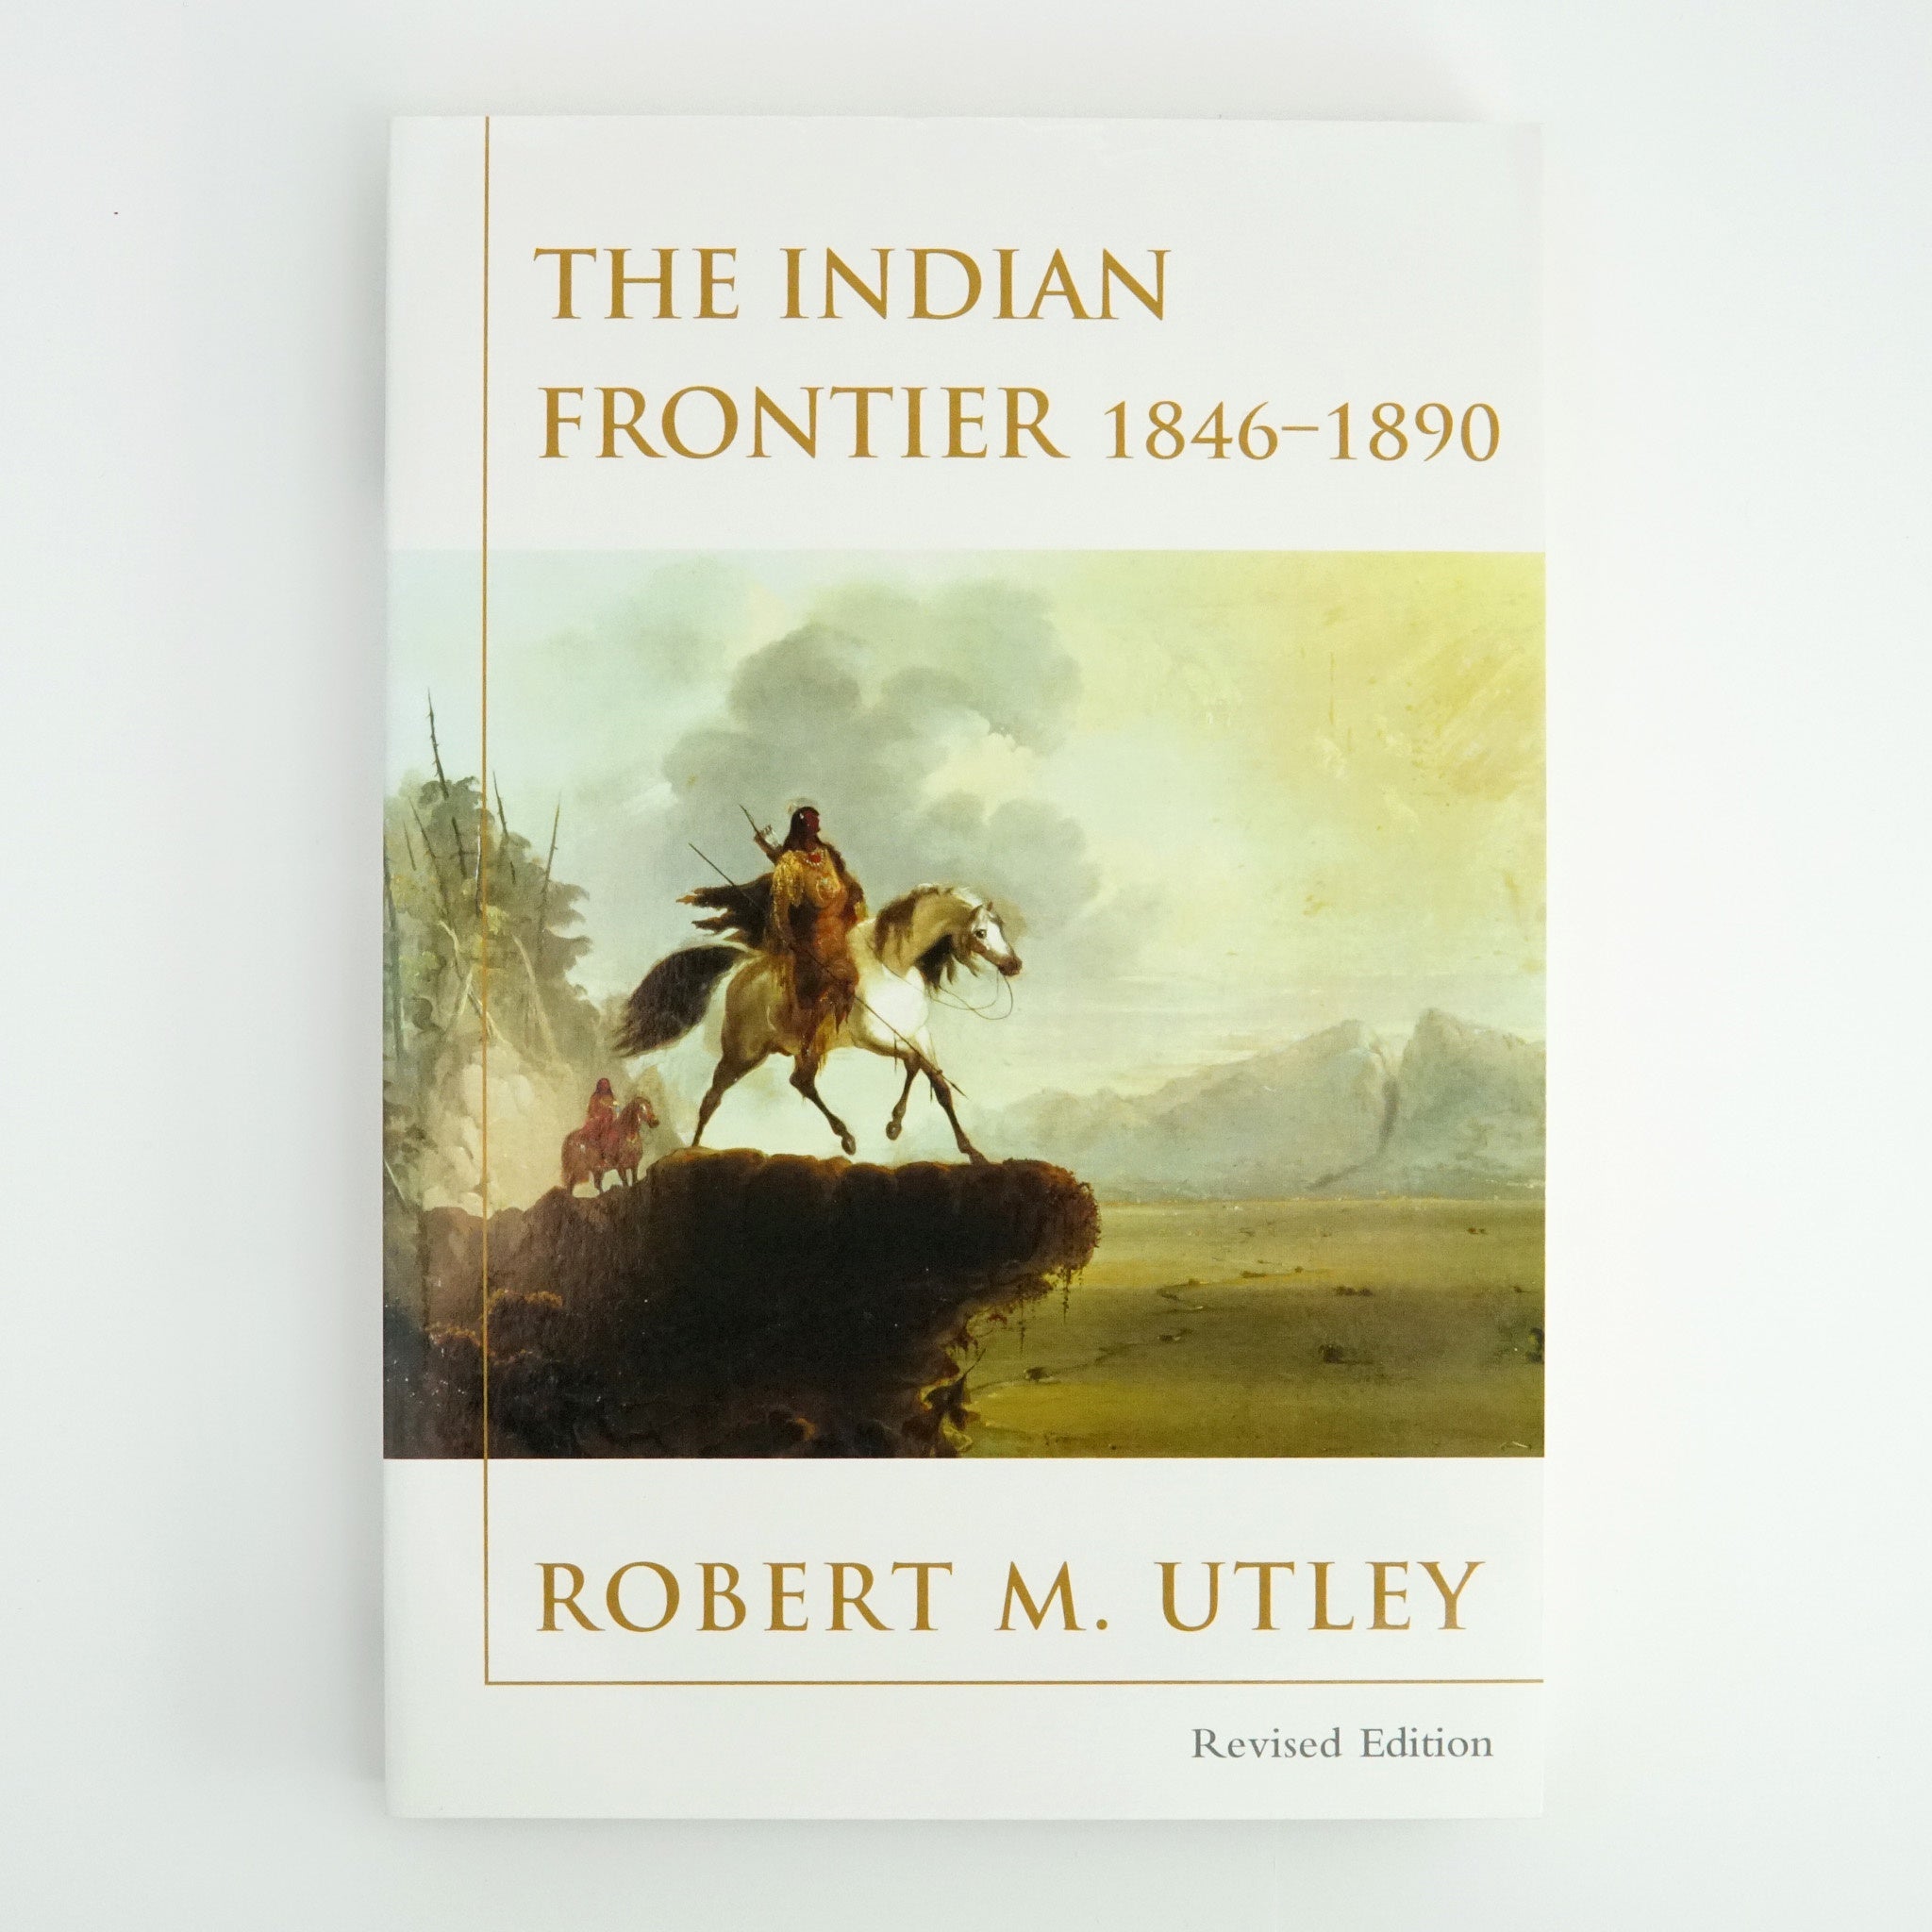 BK 12 THE INDIAN FRONTIER  1846-1890 BY ROBERT M. UTLEY #21044692 D2 MAR24